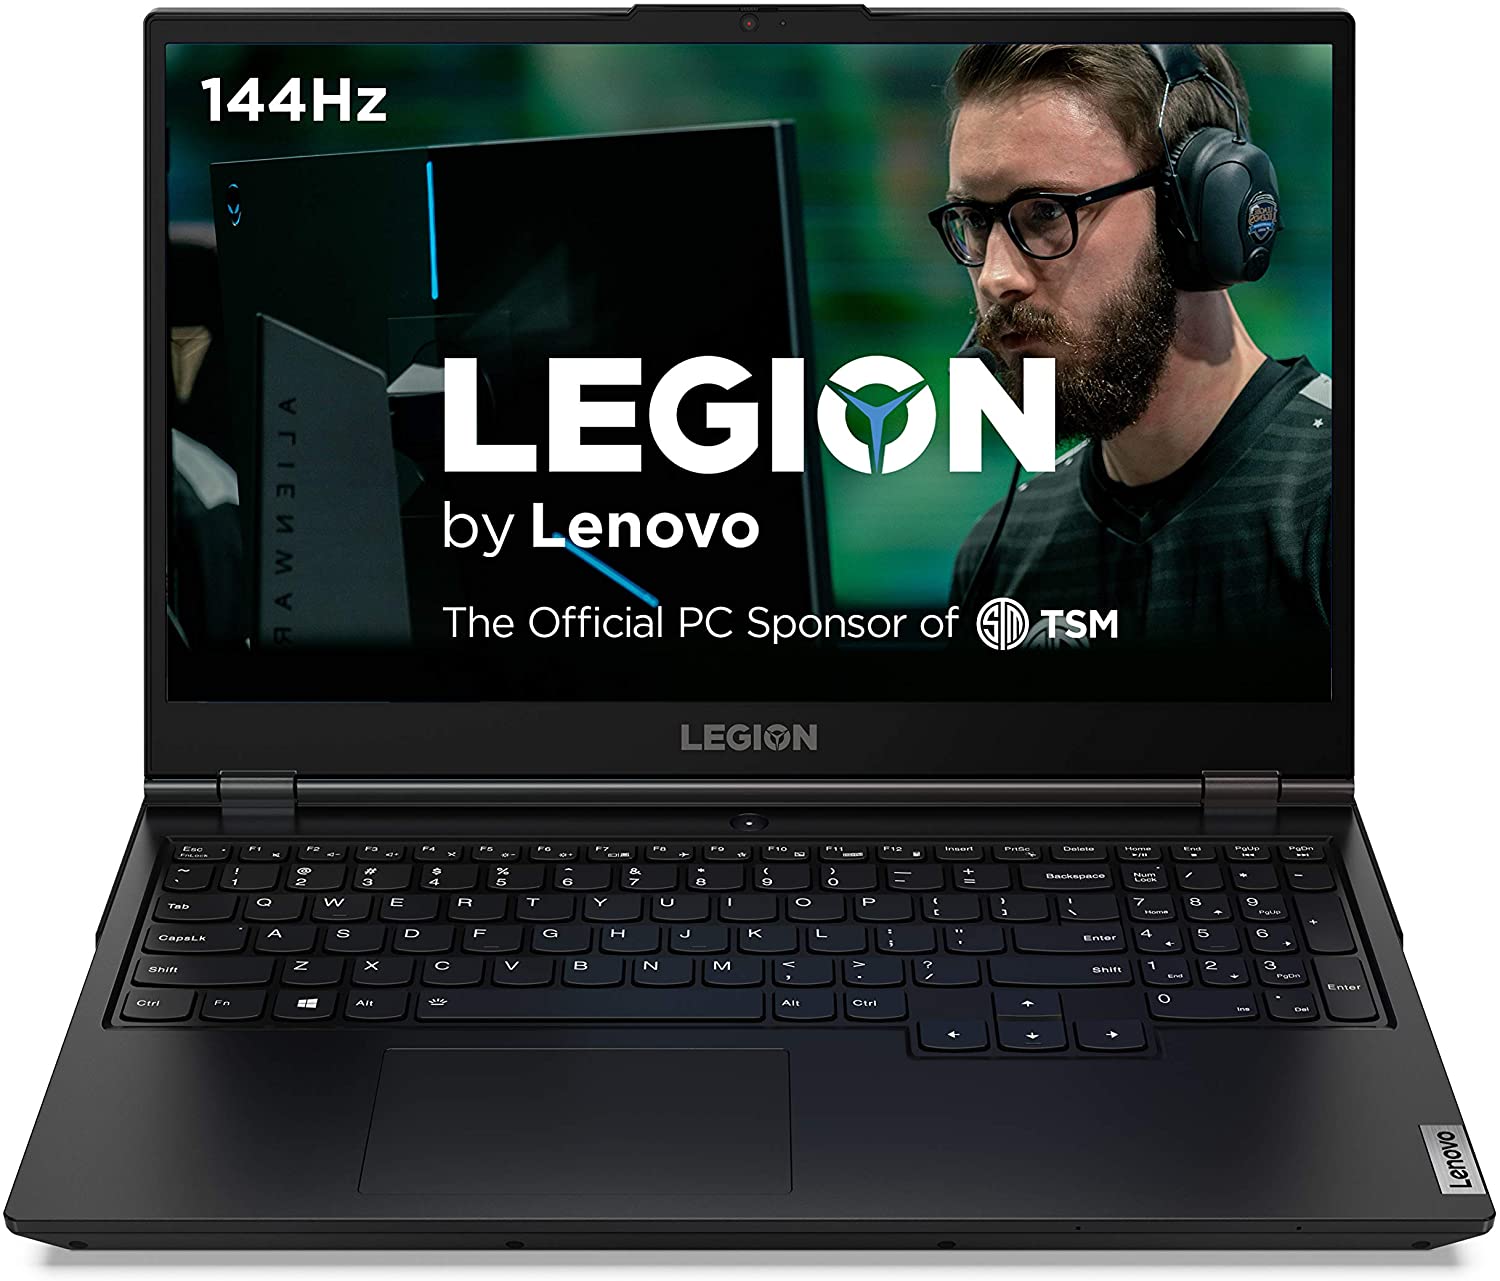 Lenovo Legion 5 - Best Thermal Gaming Laptop Under 1200